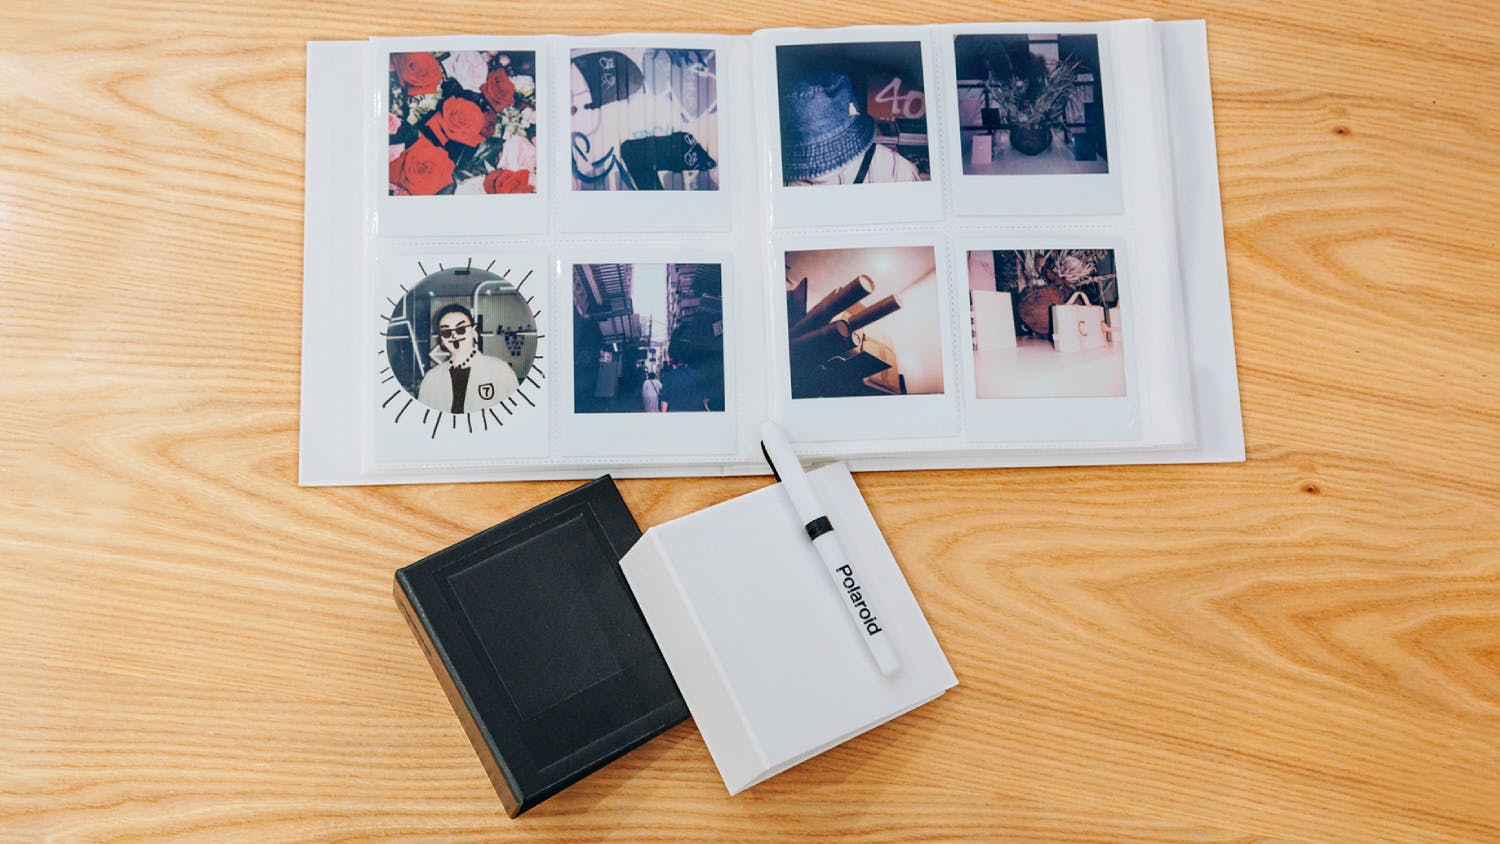 Polaroid Square Film 40 Photo Album - White (Small)